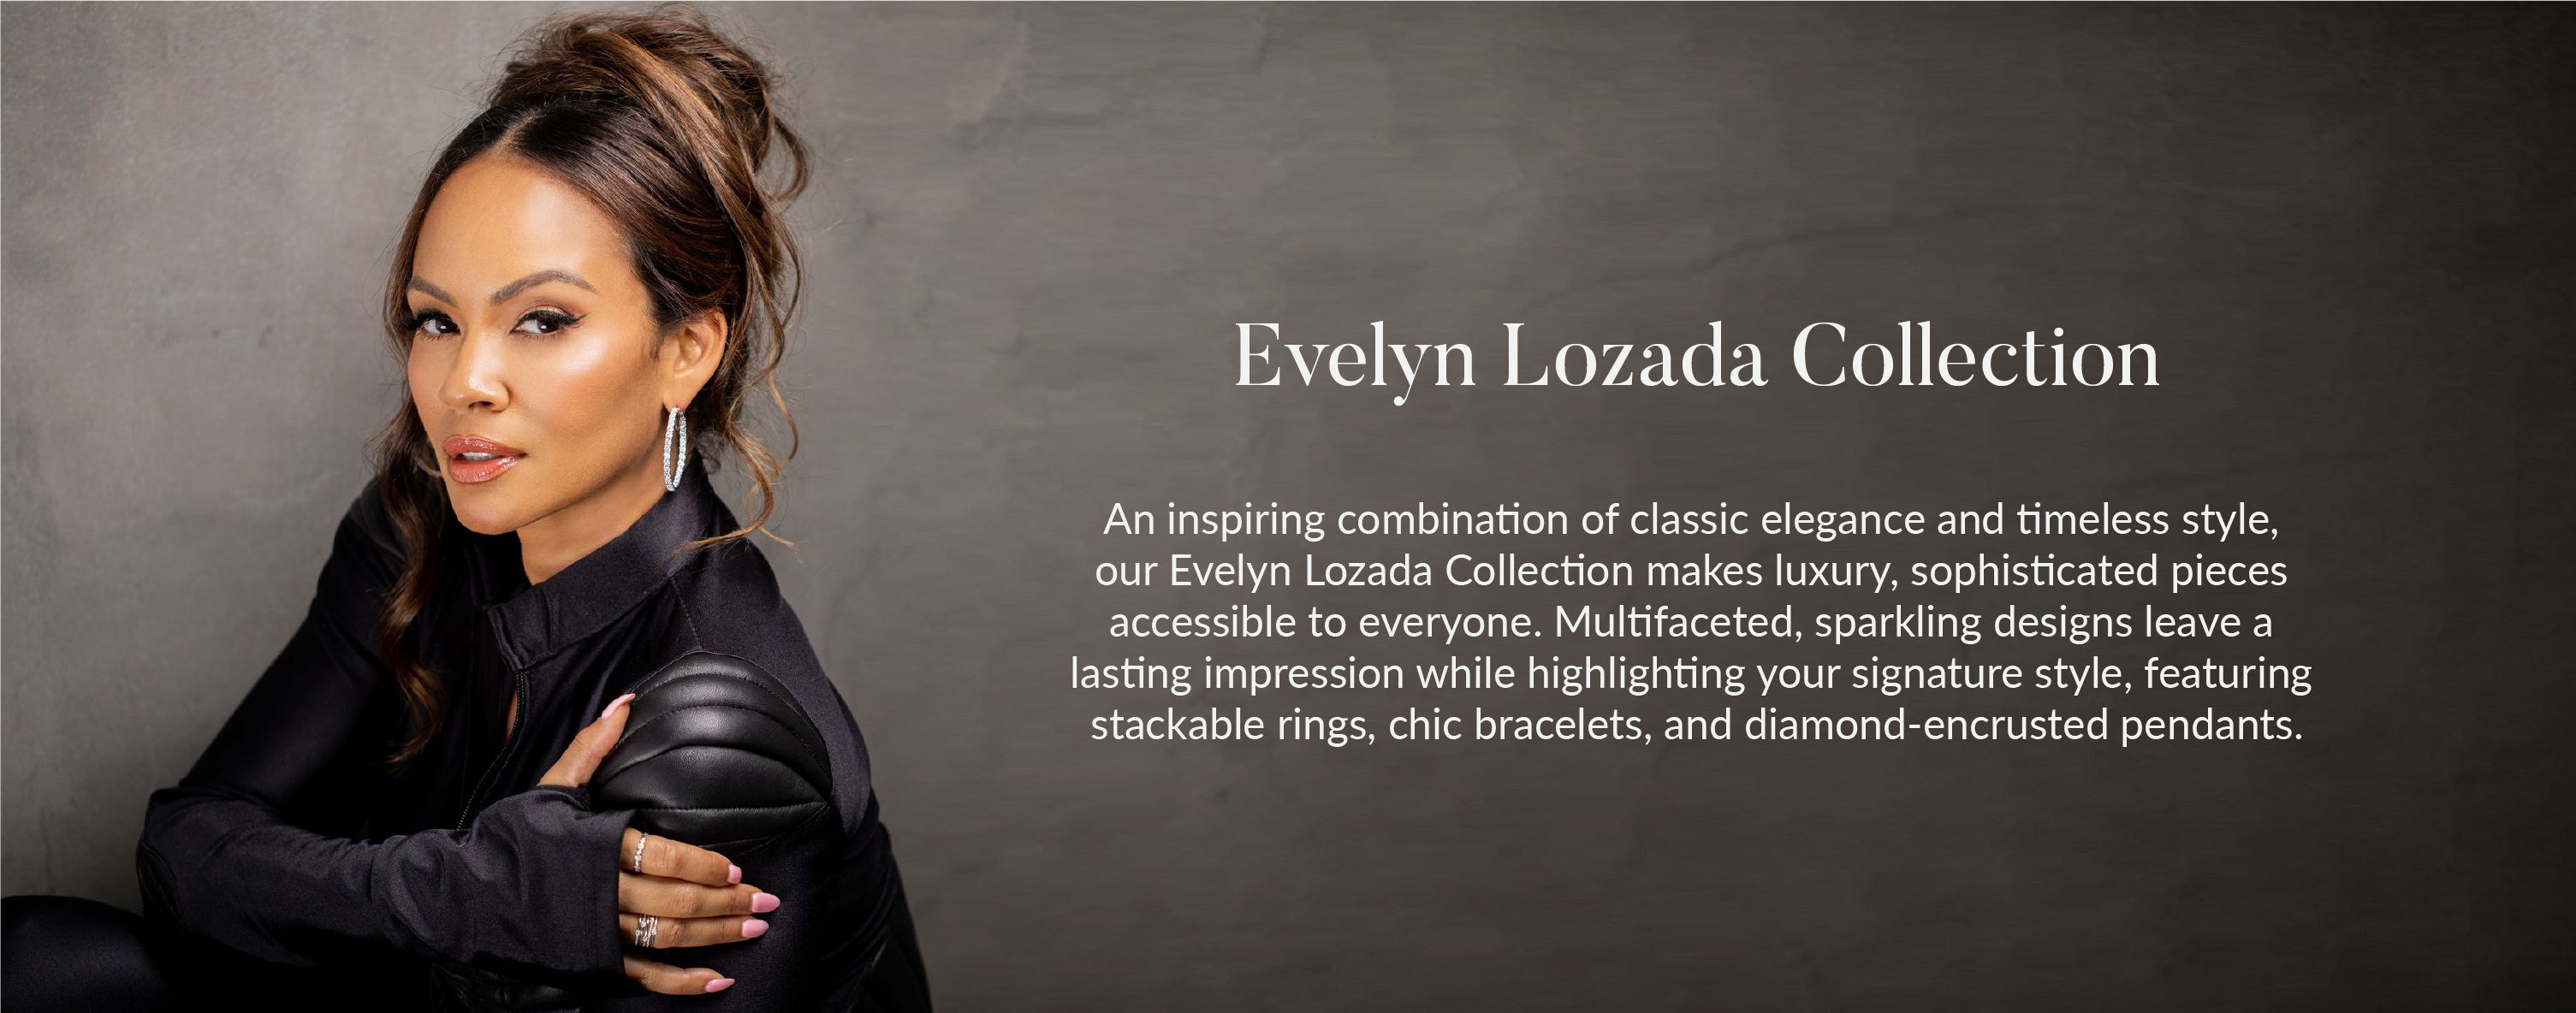 Evelyn Lozada Collection